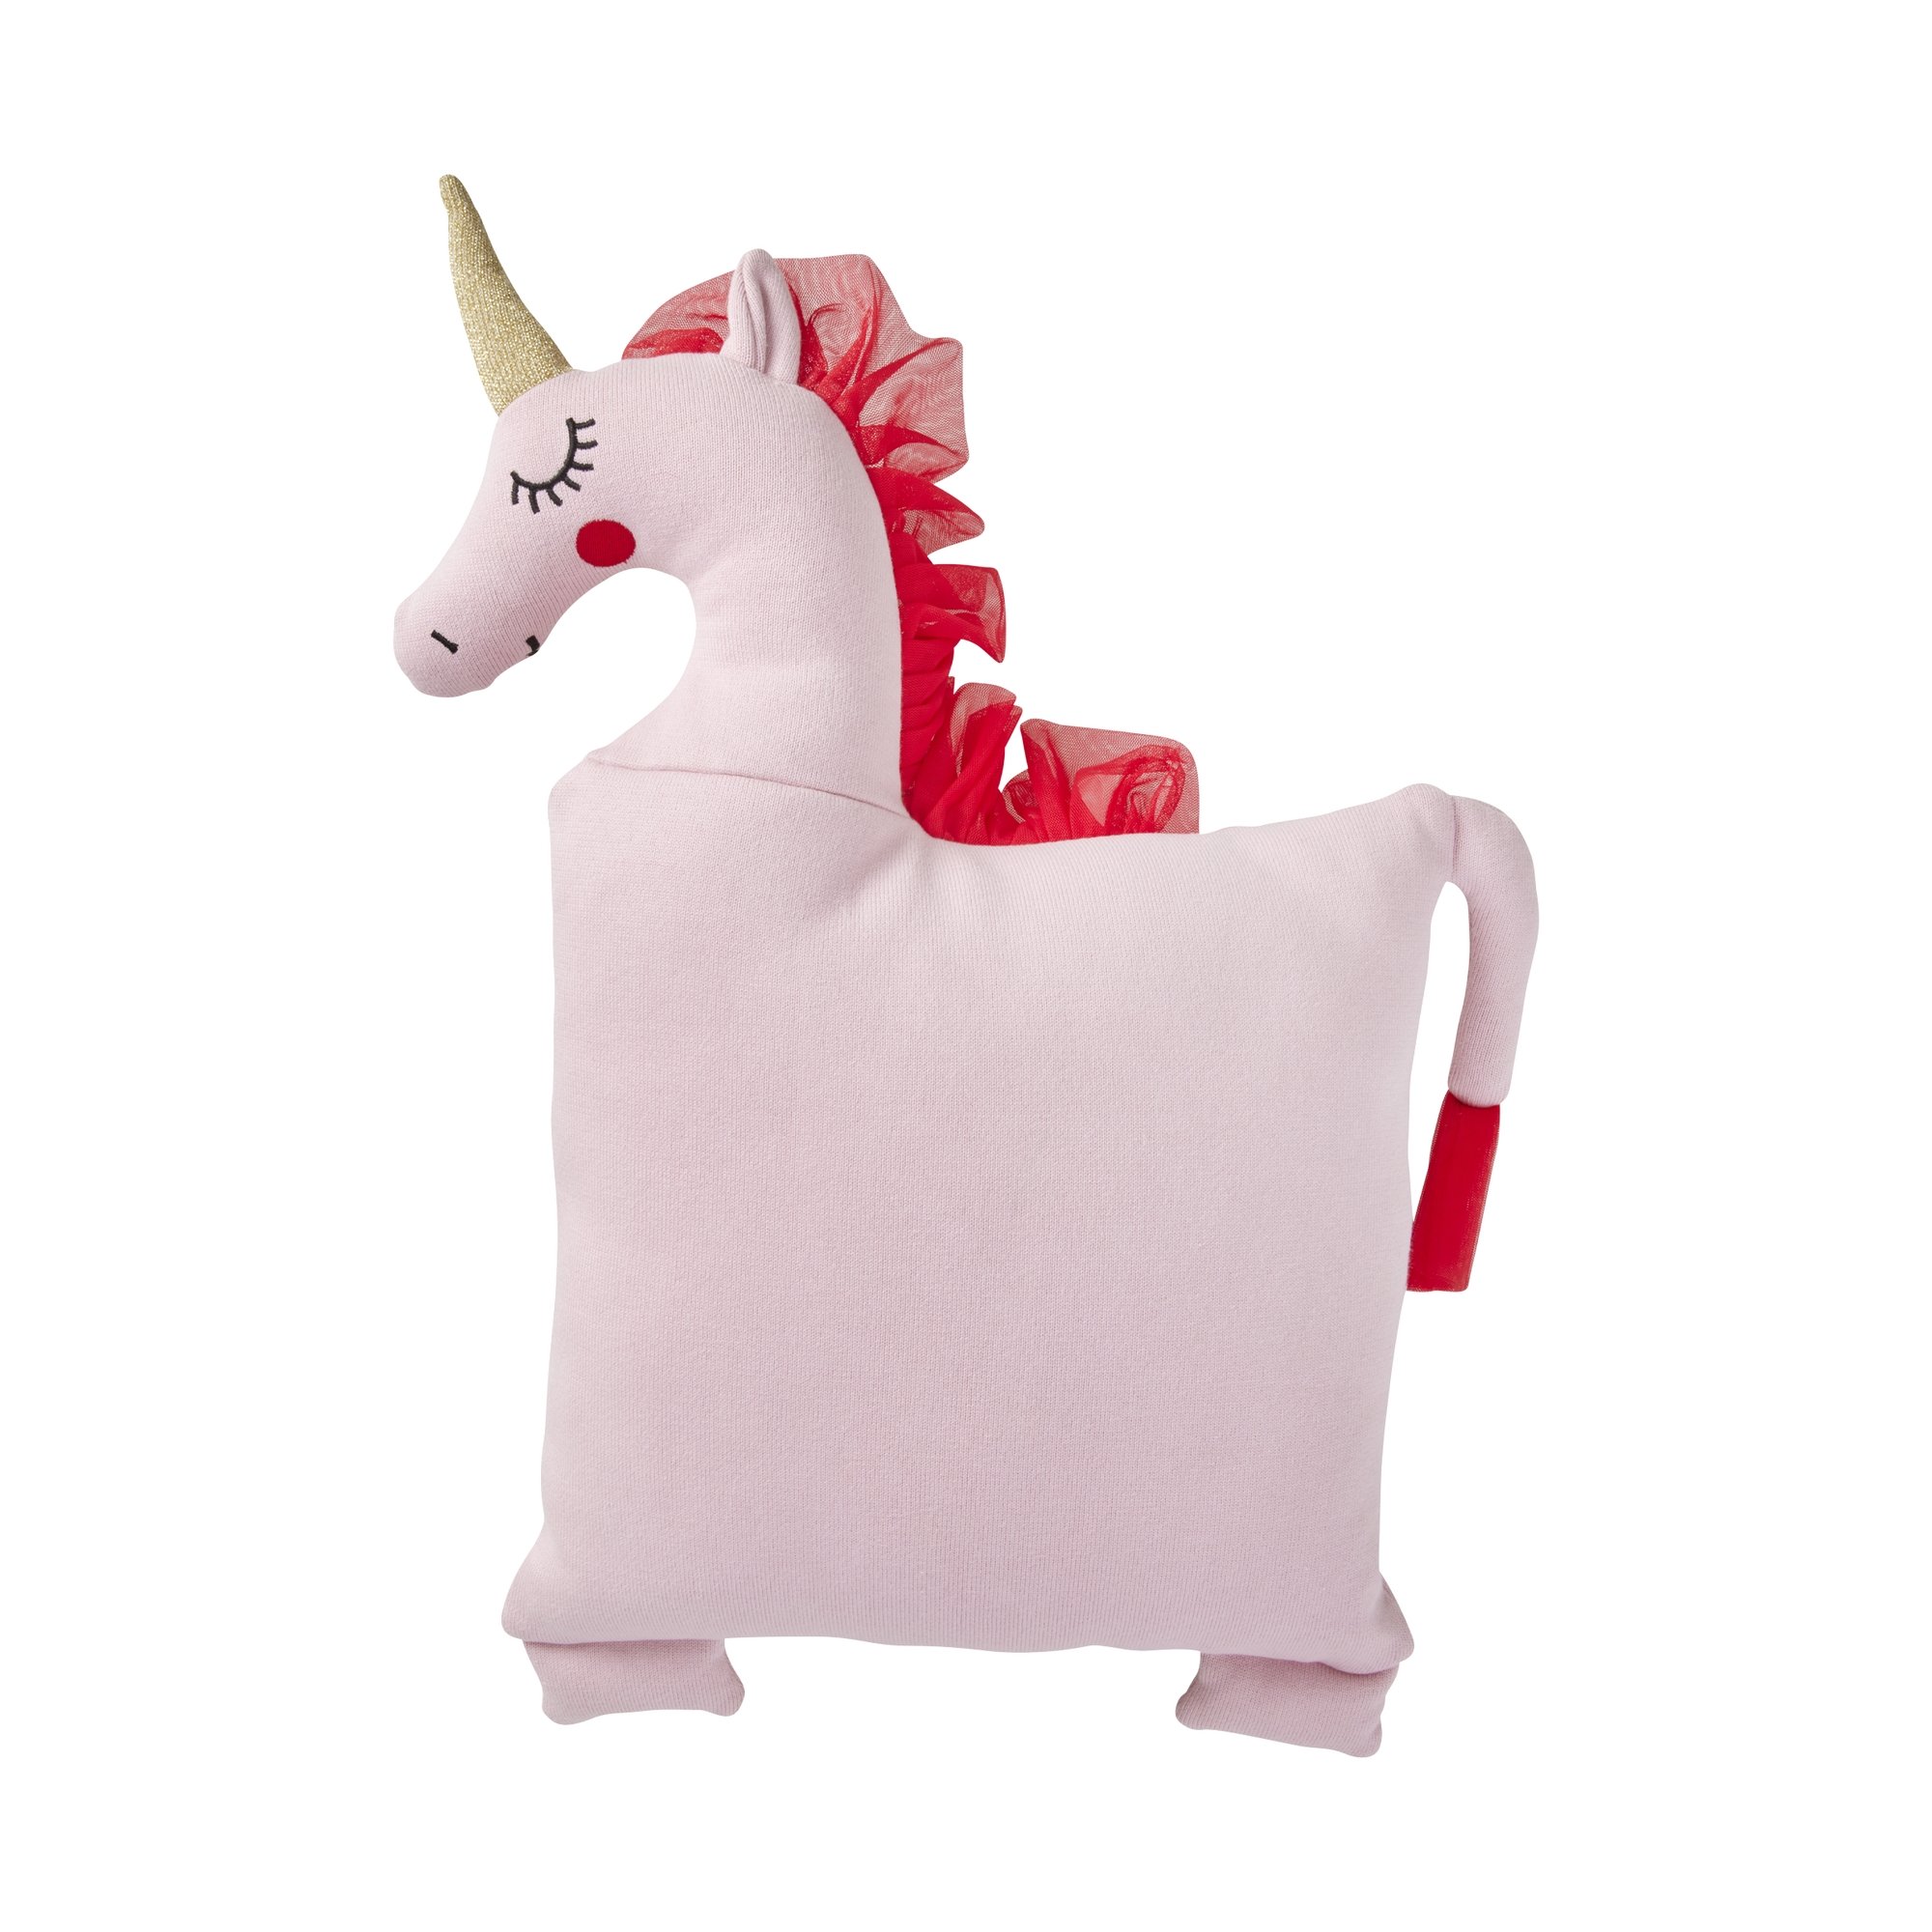 Rice - Kids Unicorn Cushion - Soft Pink - 40x50 cm - Baby og barn